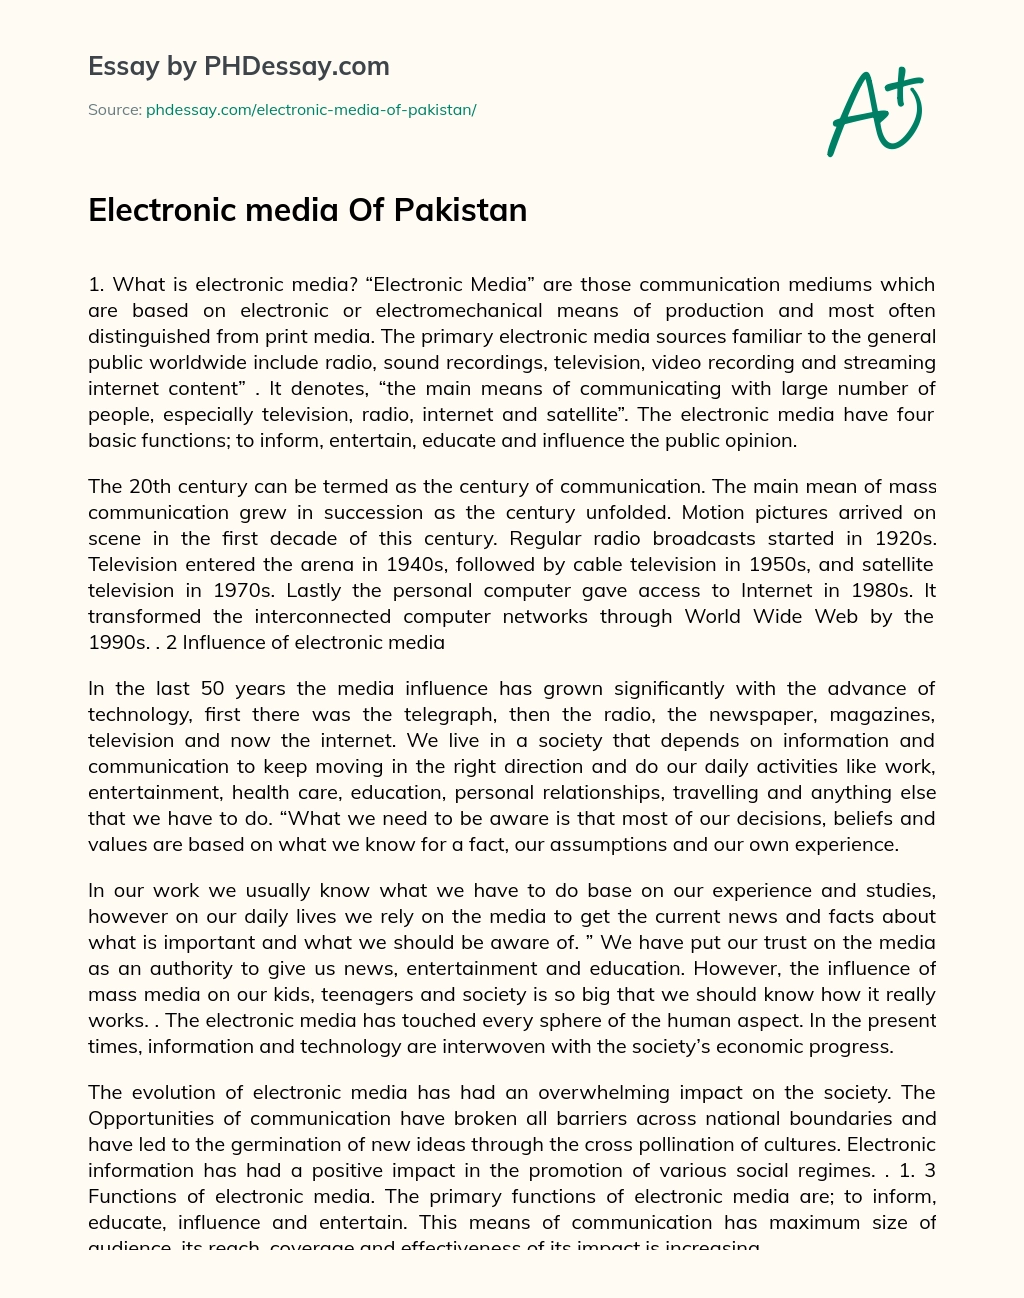 Electronic media Of Pakistan essay